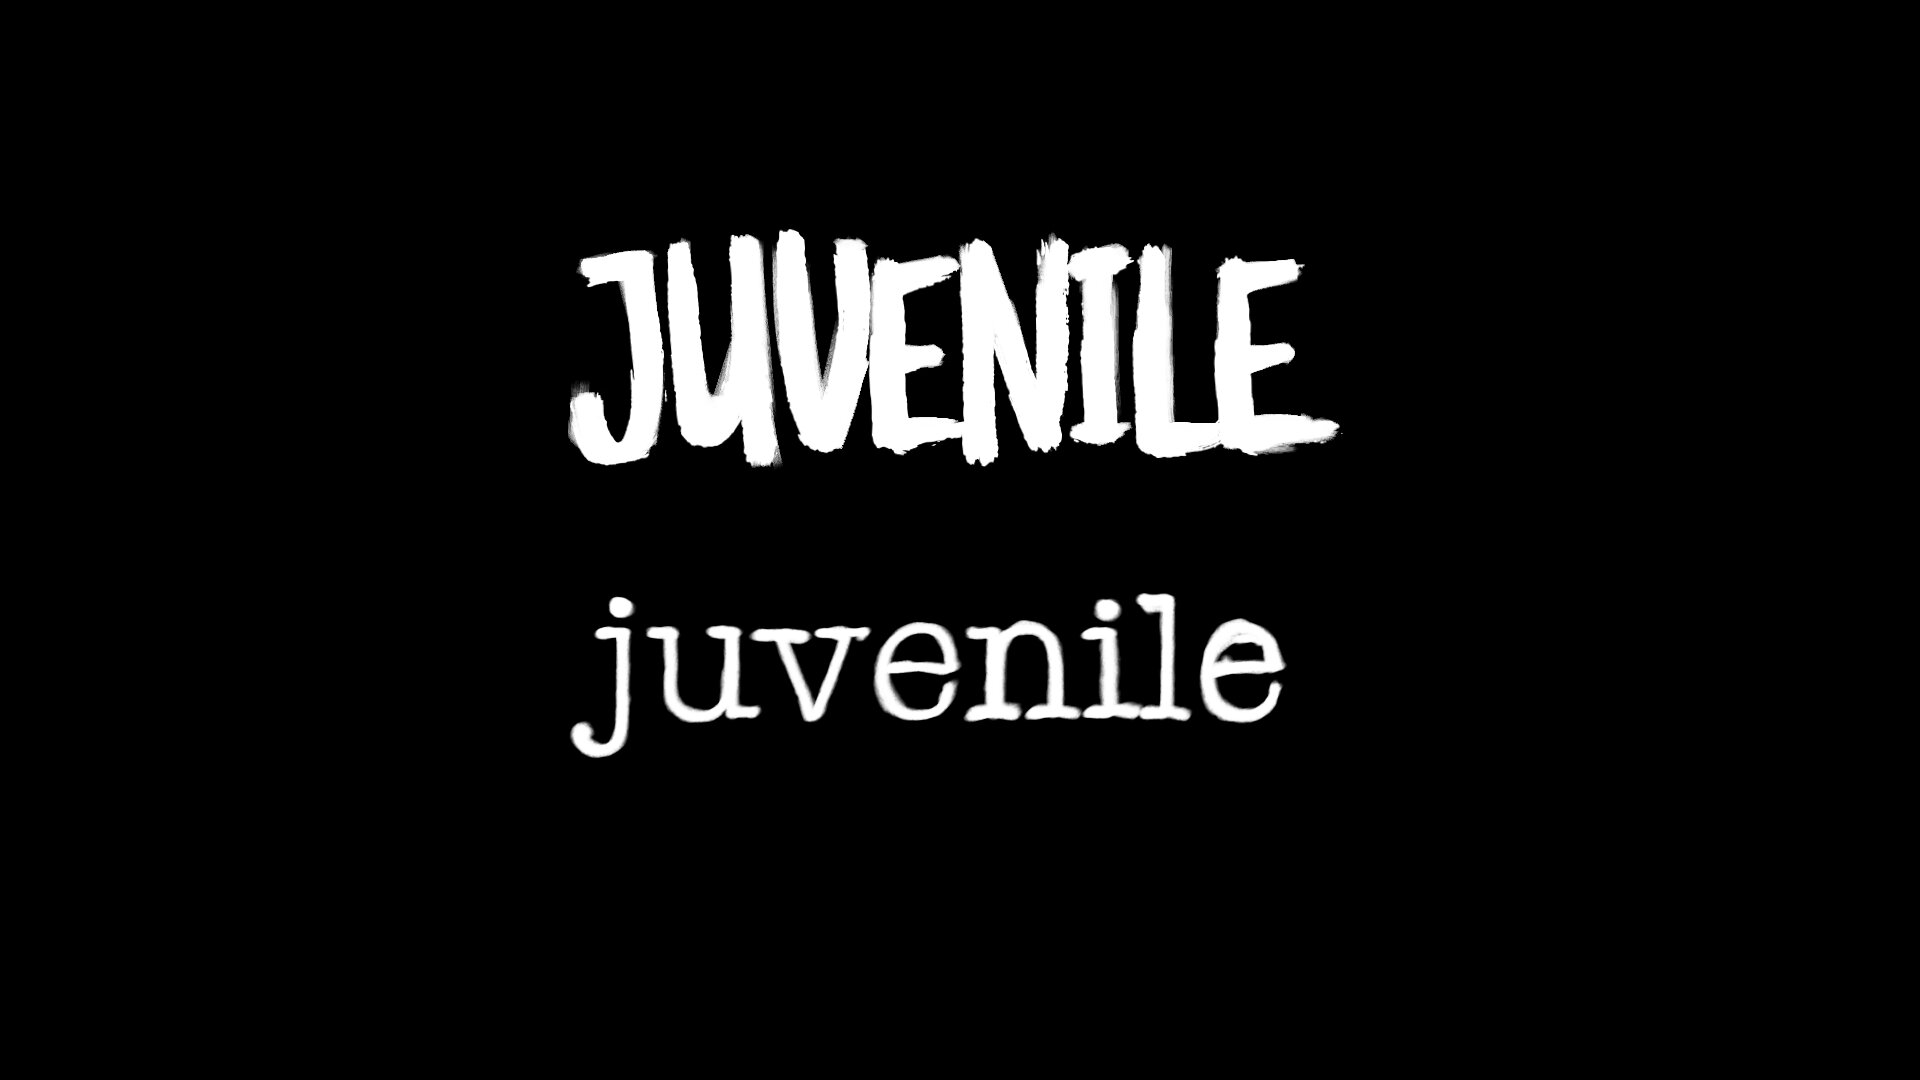 Juvenile Revised 003.jpg